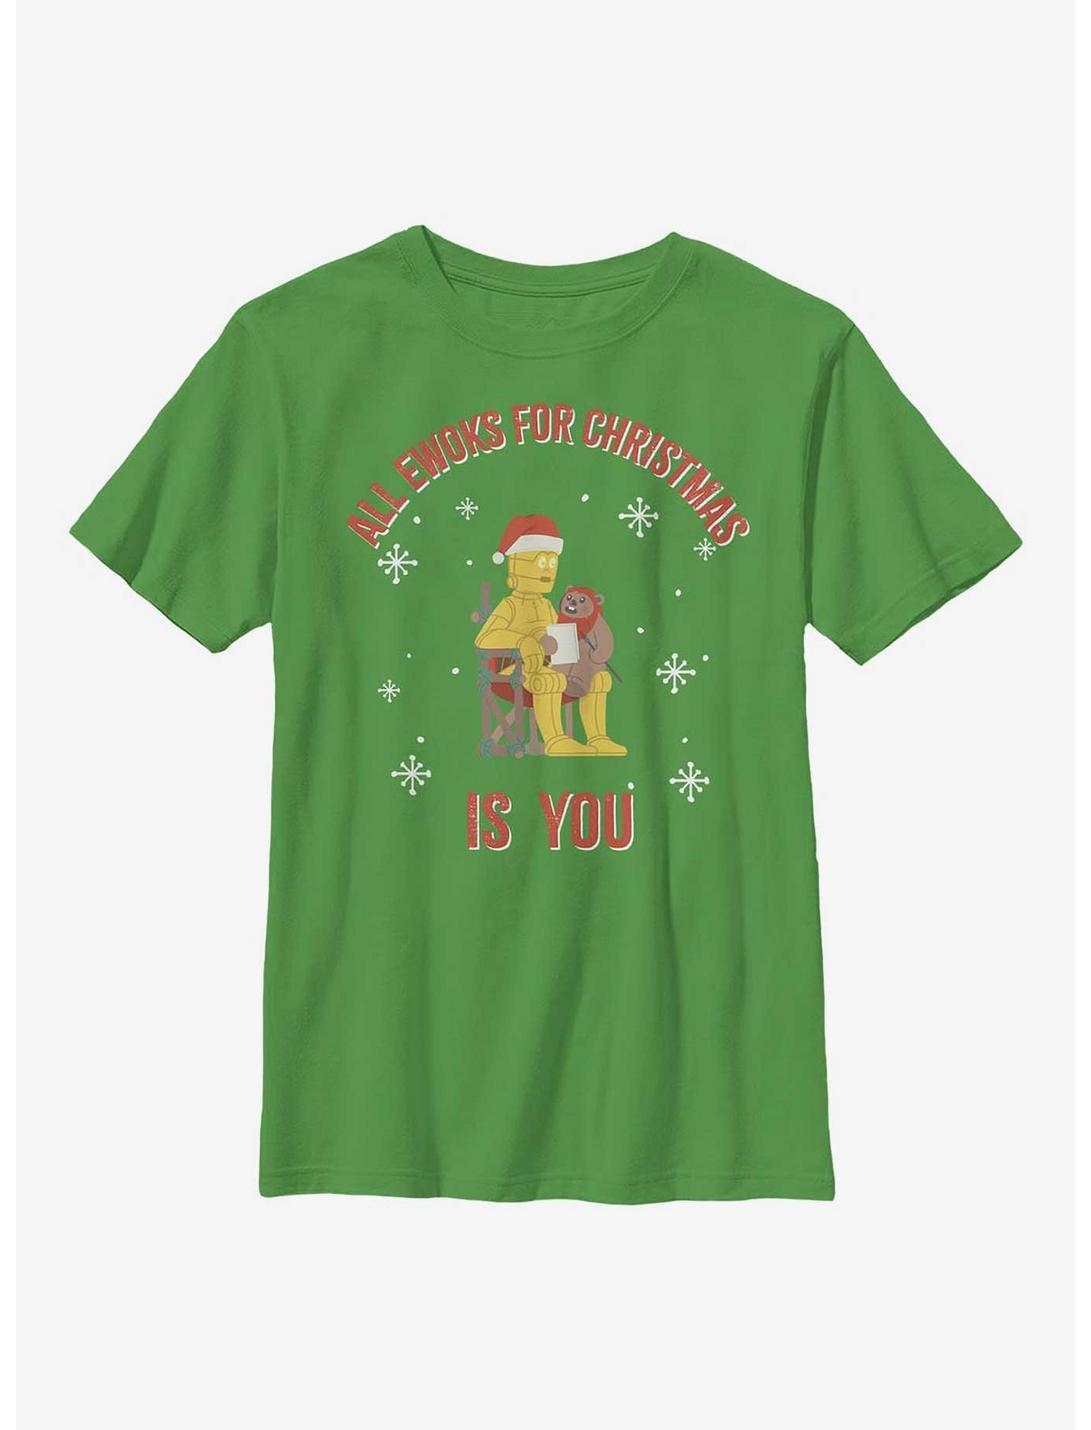 Star Wars Ewoks For Christmas Youth T-Shirt, KELLY, hi-res